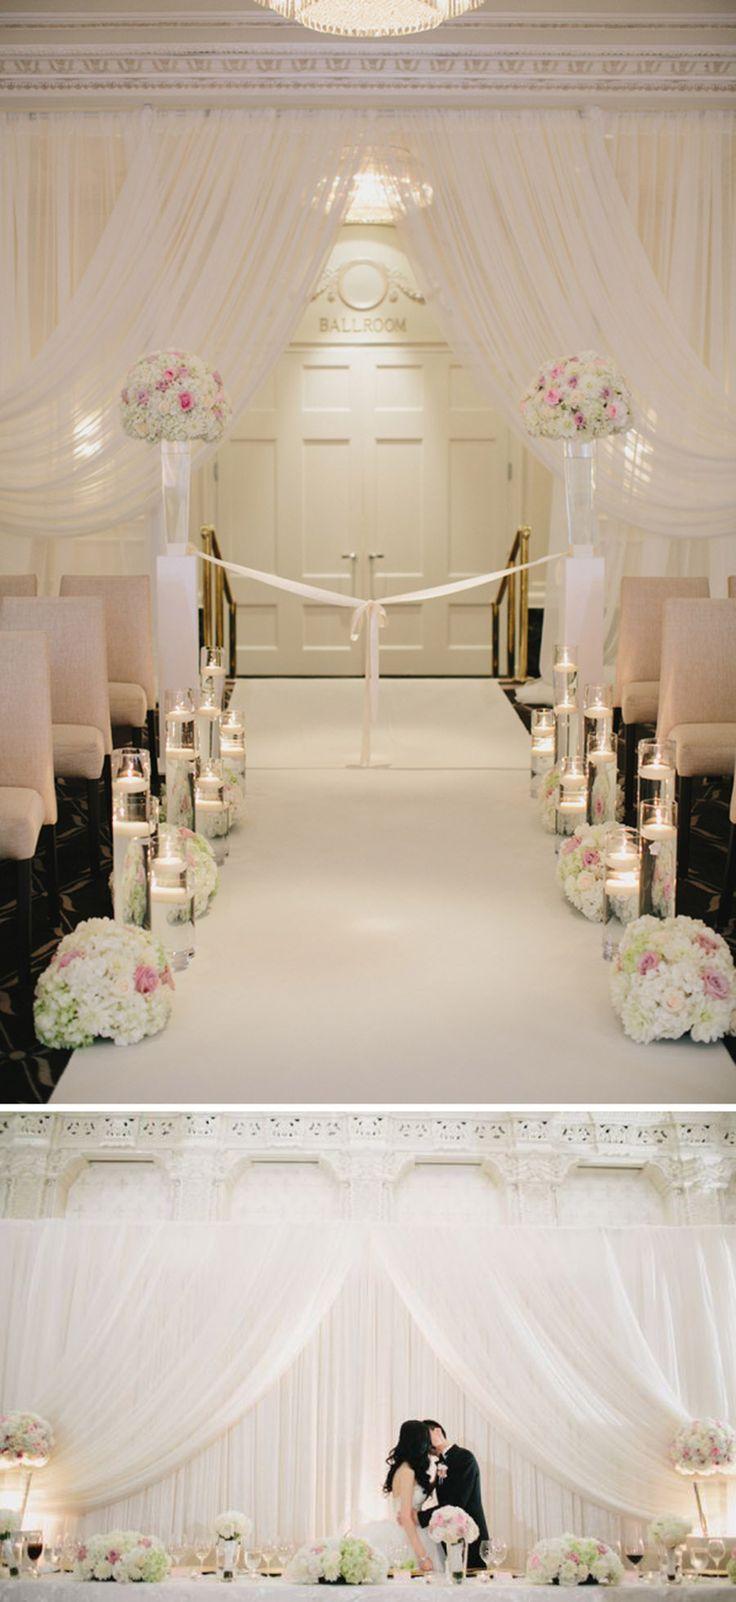 زفاف - 7 Ways To Transform A Wedding Space And Add A Touch Of Luxury